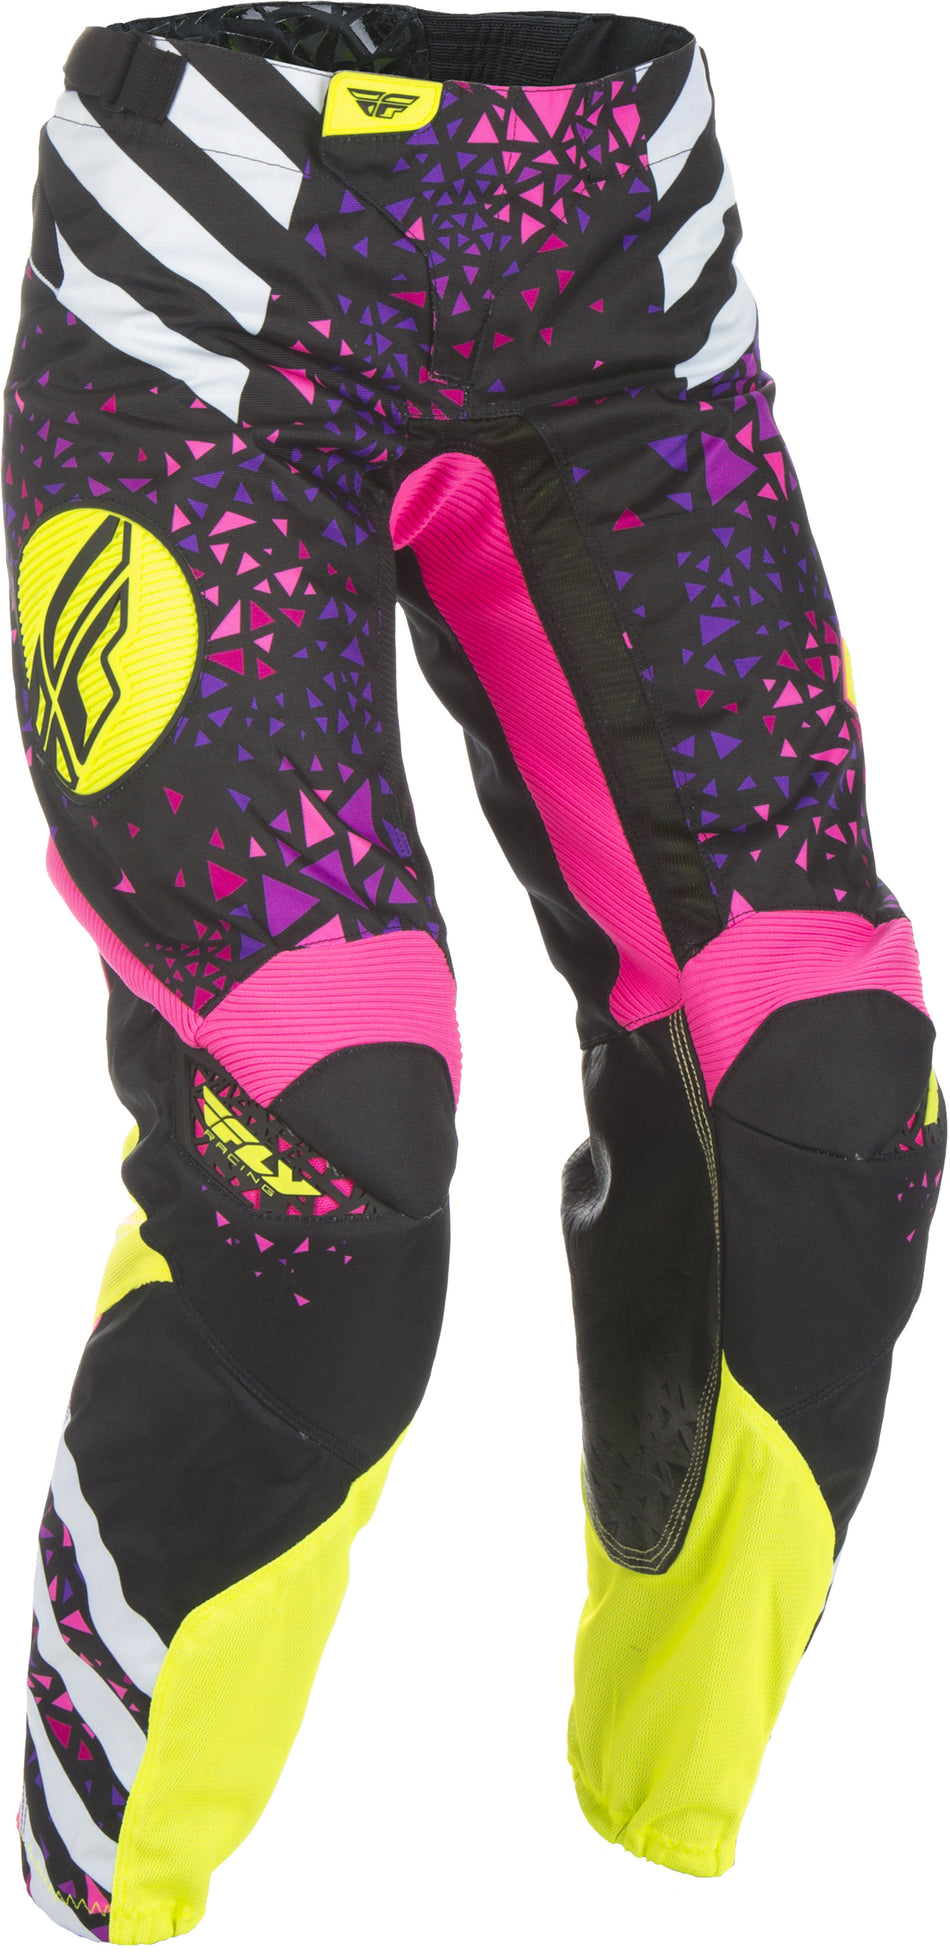 FLY RACING Kinetic Women's Race Pants Neon/Pink/Hi-Vis Sz 5/6 371-63906